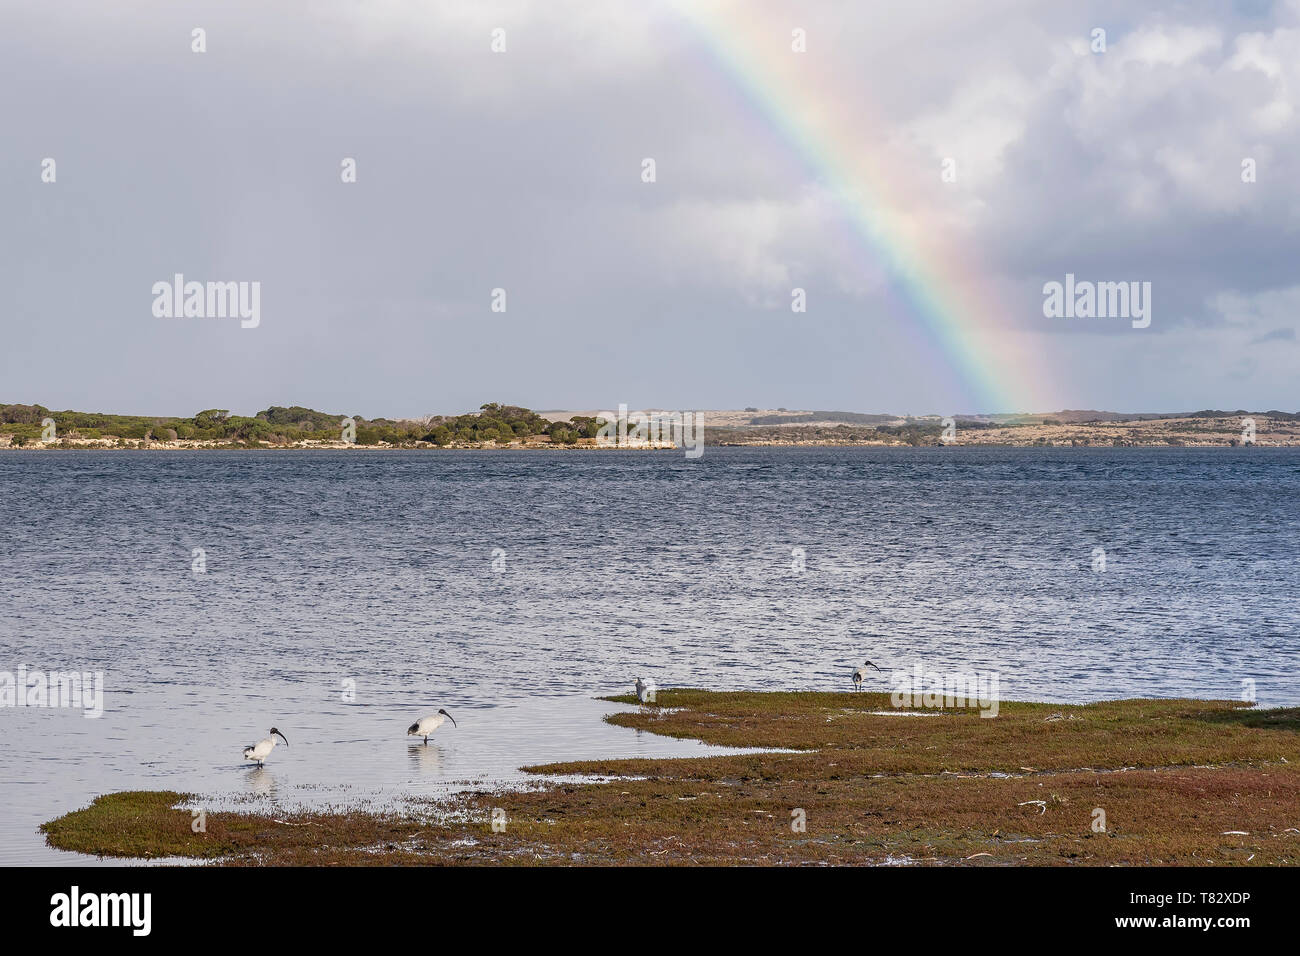 Australian White Ibis in the Kangaroo Island Sea with a rainbow in the background, Western Australia Stock Photo